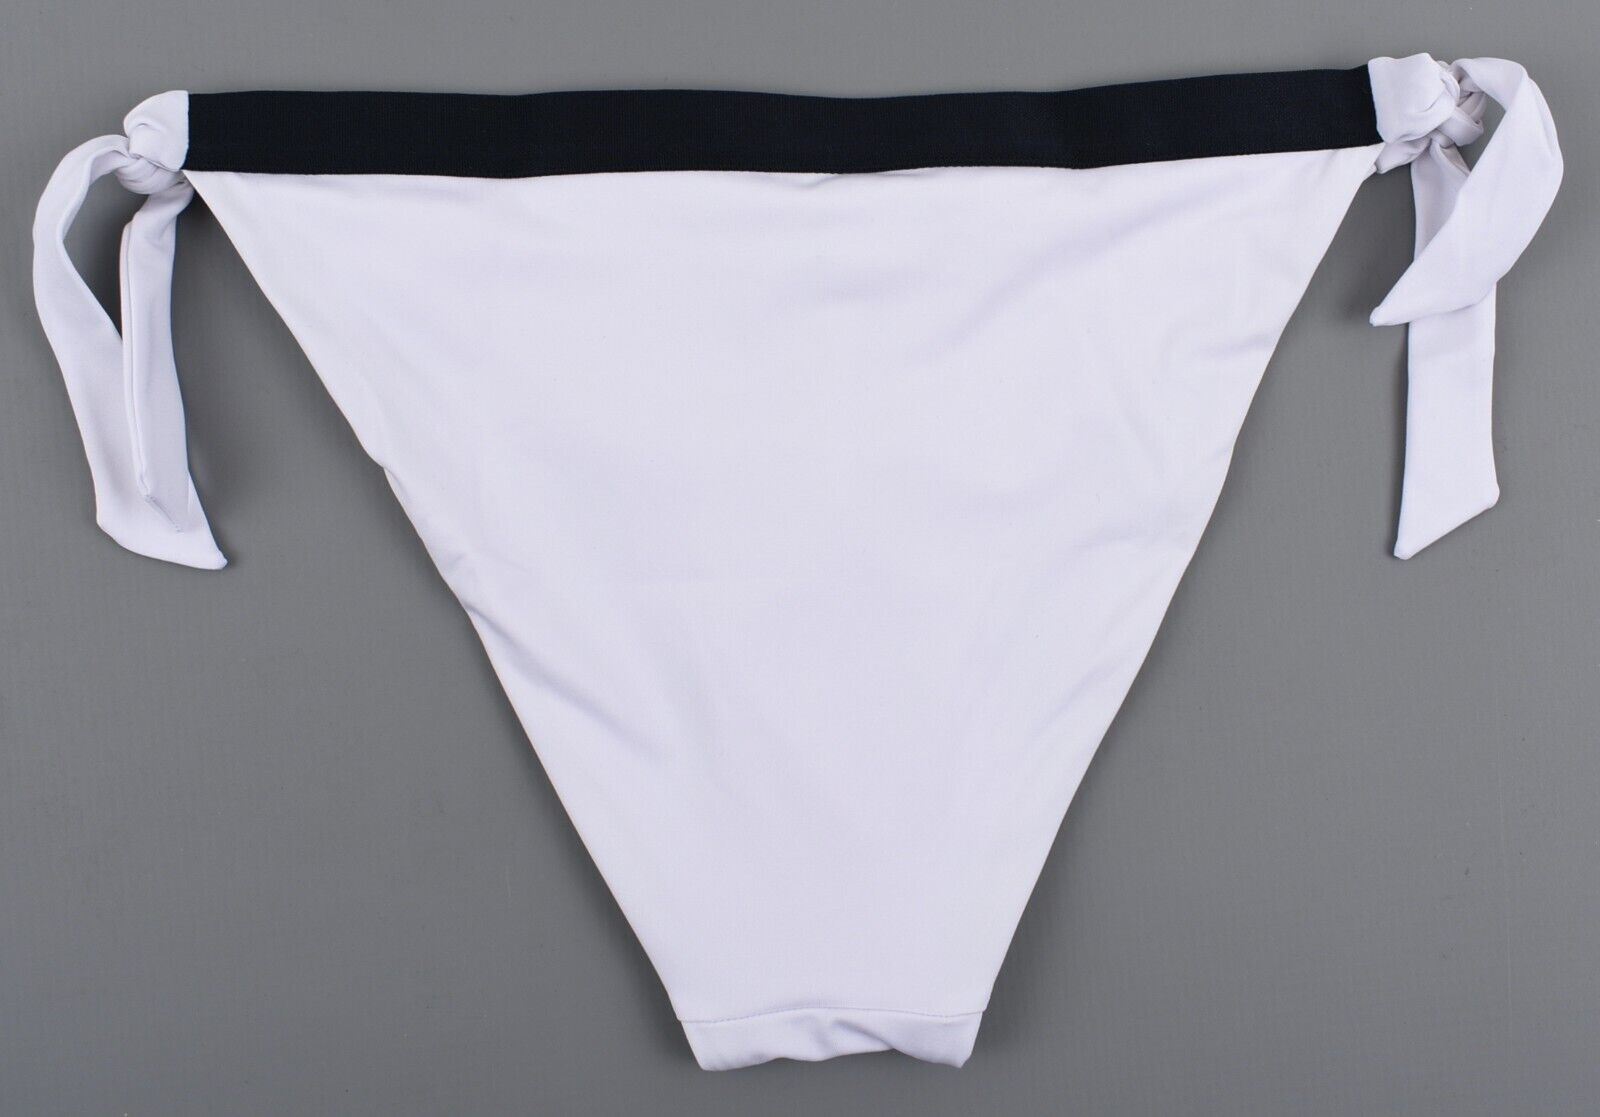 TOMMY HILFIGER Swimwear: Women's Side Tie Cheeky Bikini, White, size M (UK 12)